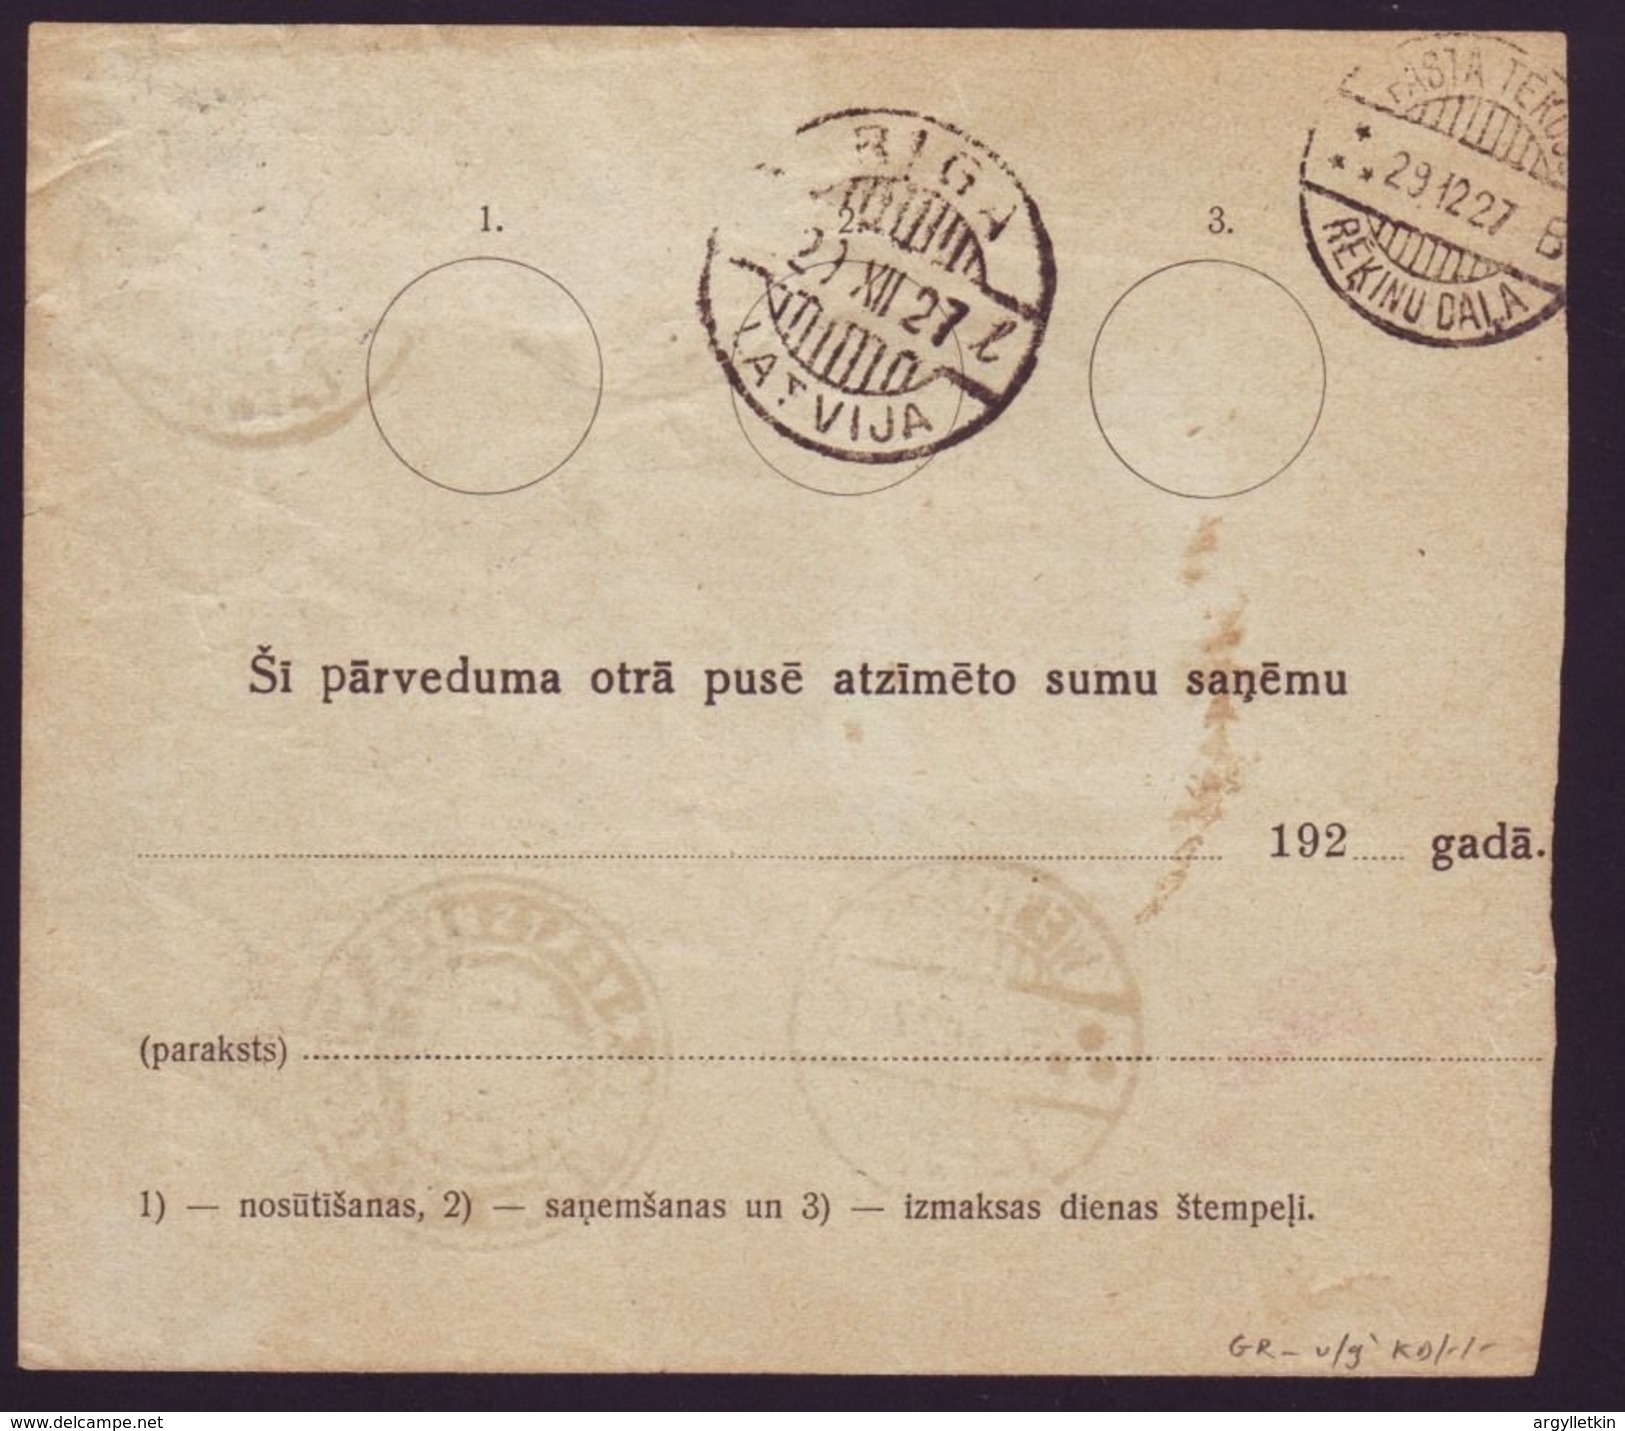 LATVIA PARCEL RECEIPT NEGATIVE SEAL WENTSPILS 1927 - Latvia